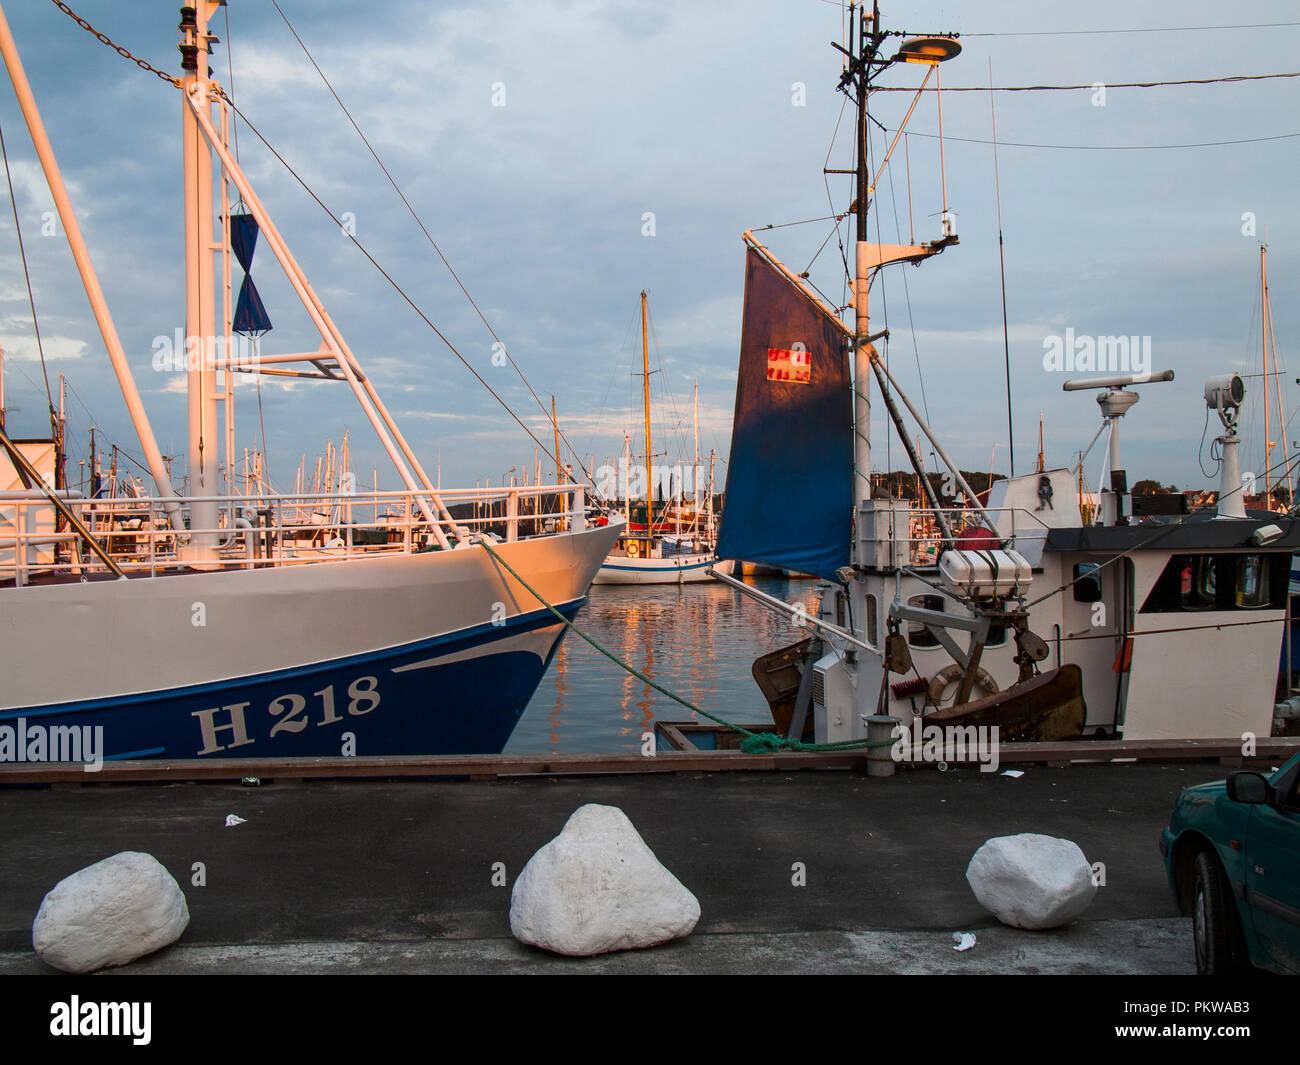 Idyllic Scene from the Fishing Port of Gilleleje, Denmark. Stock Photo